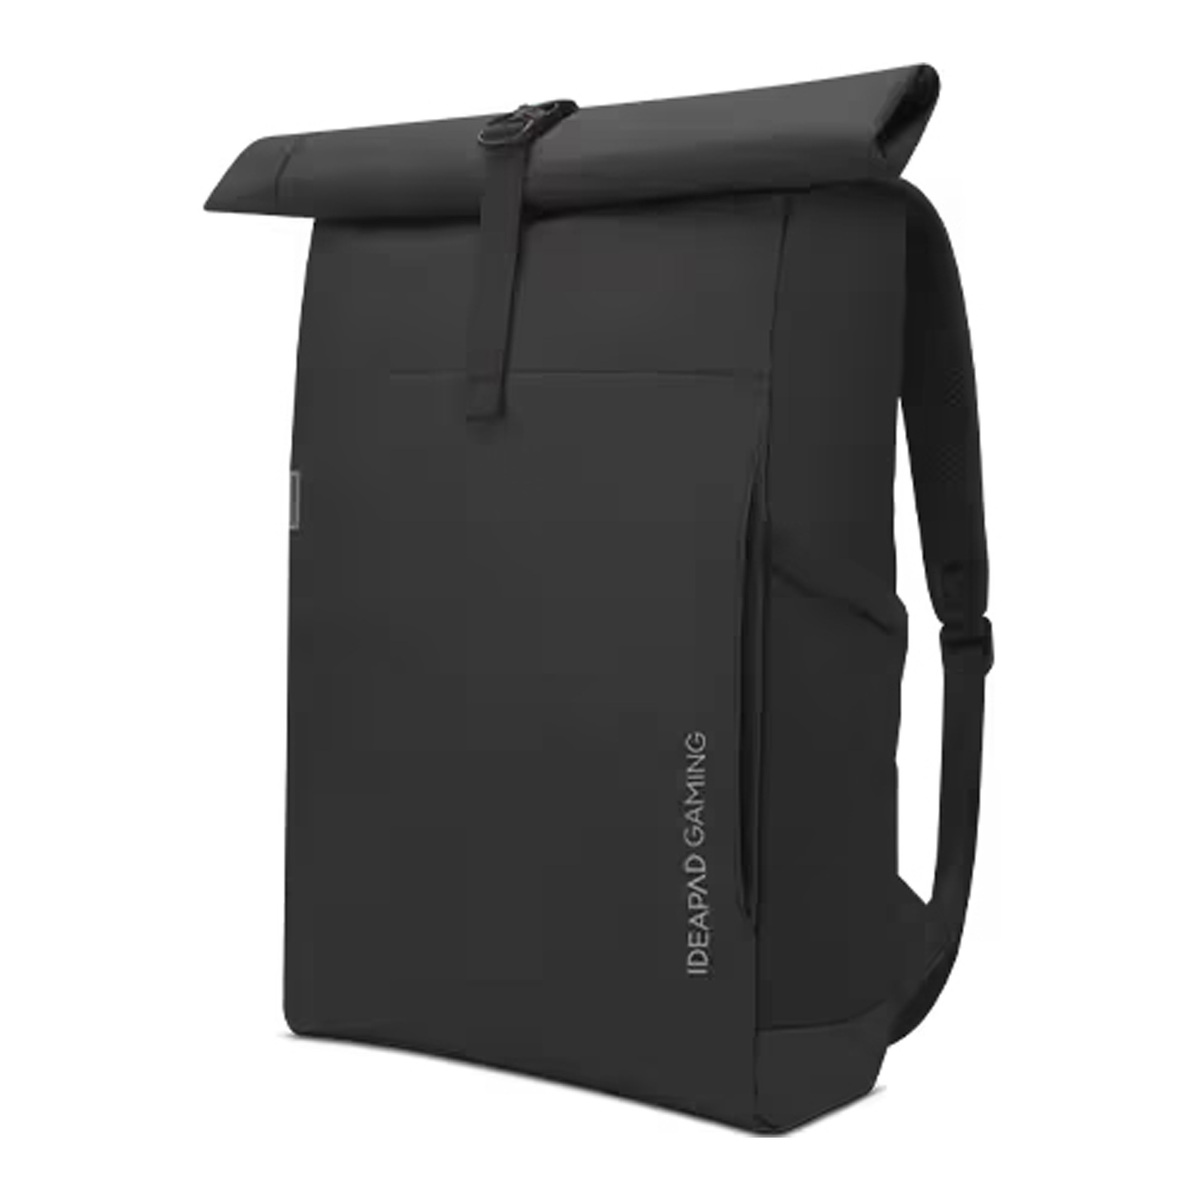 Lenovo IdeaPad Gaming Modern Backpack, 16-inch Laptop Storage, Black, GX41H70101